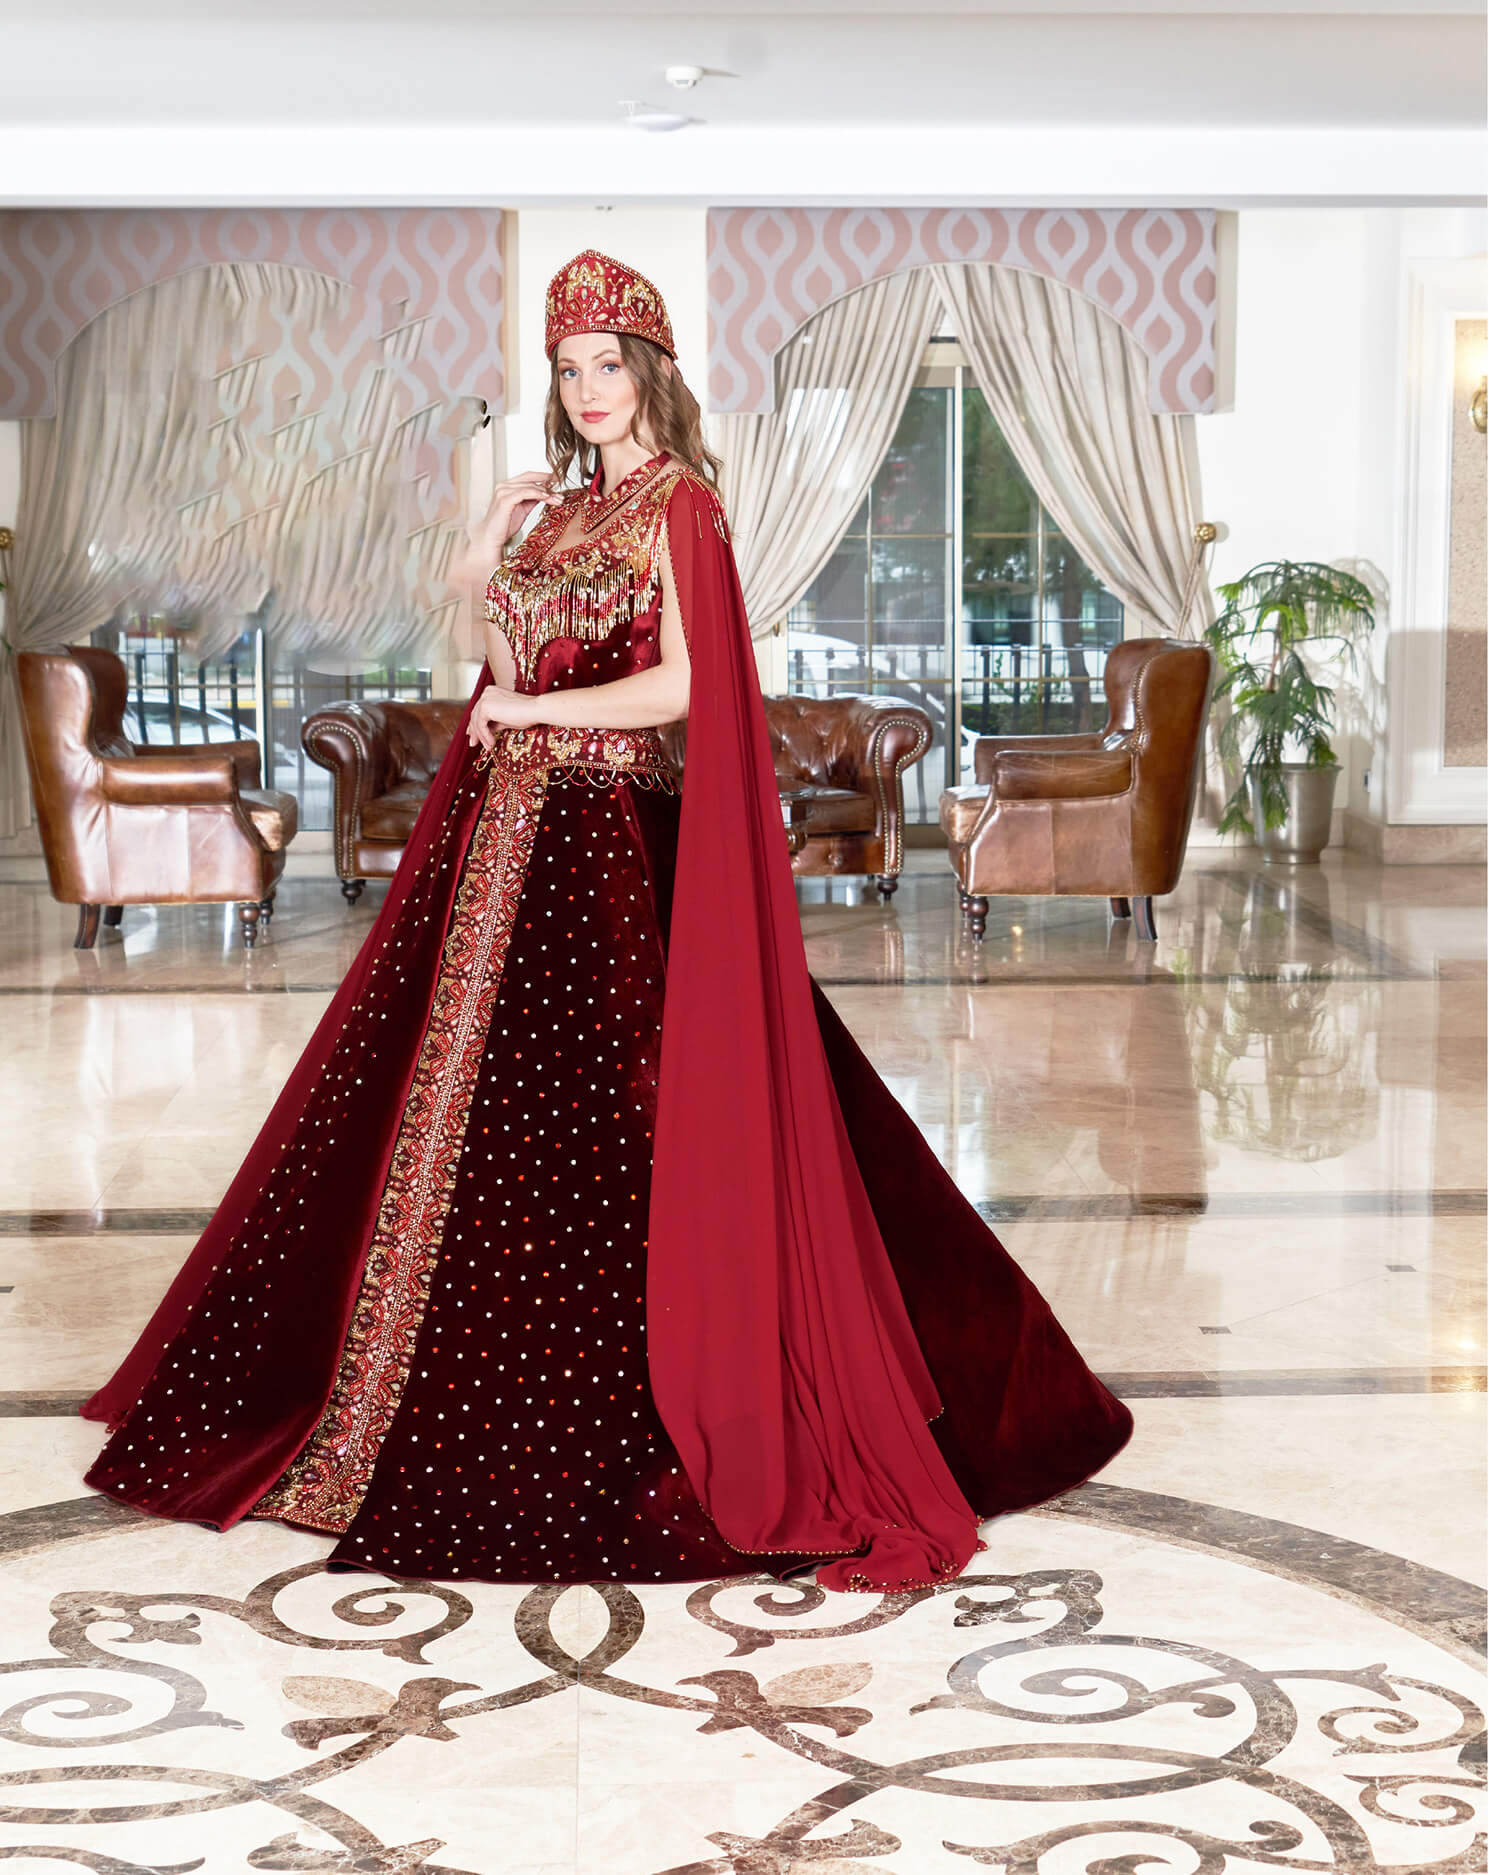 Princess Model Cape Claret Red Henna Dress